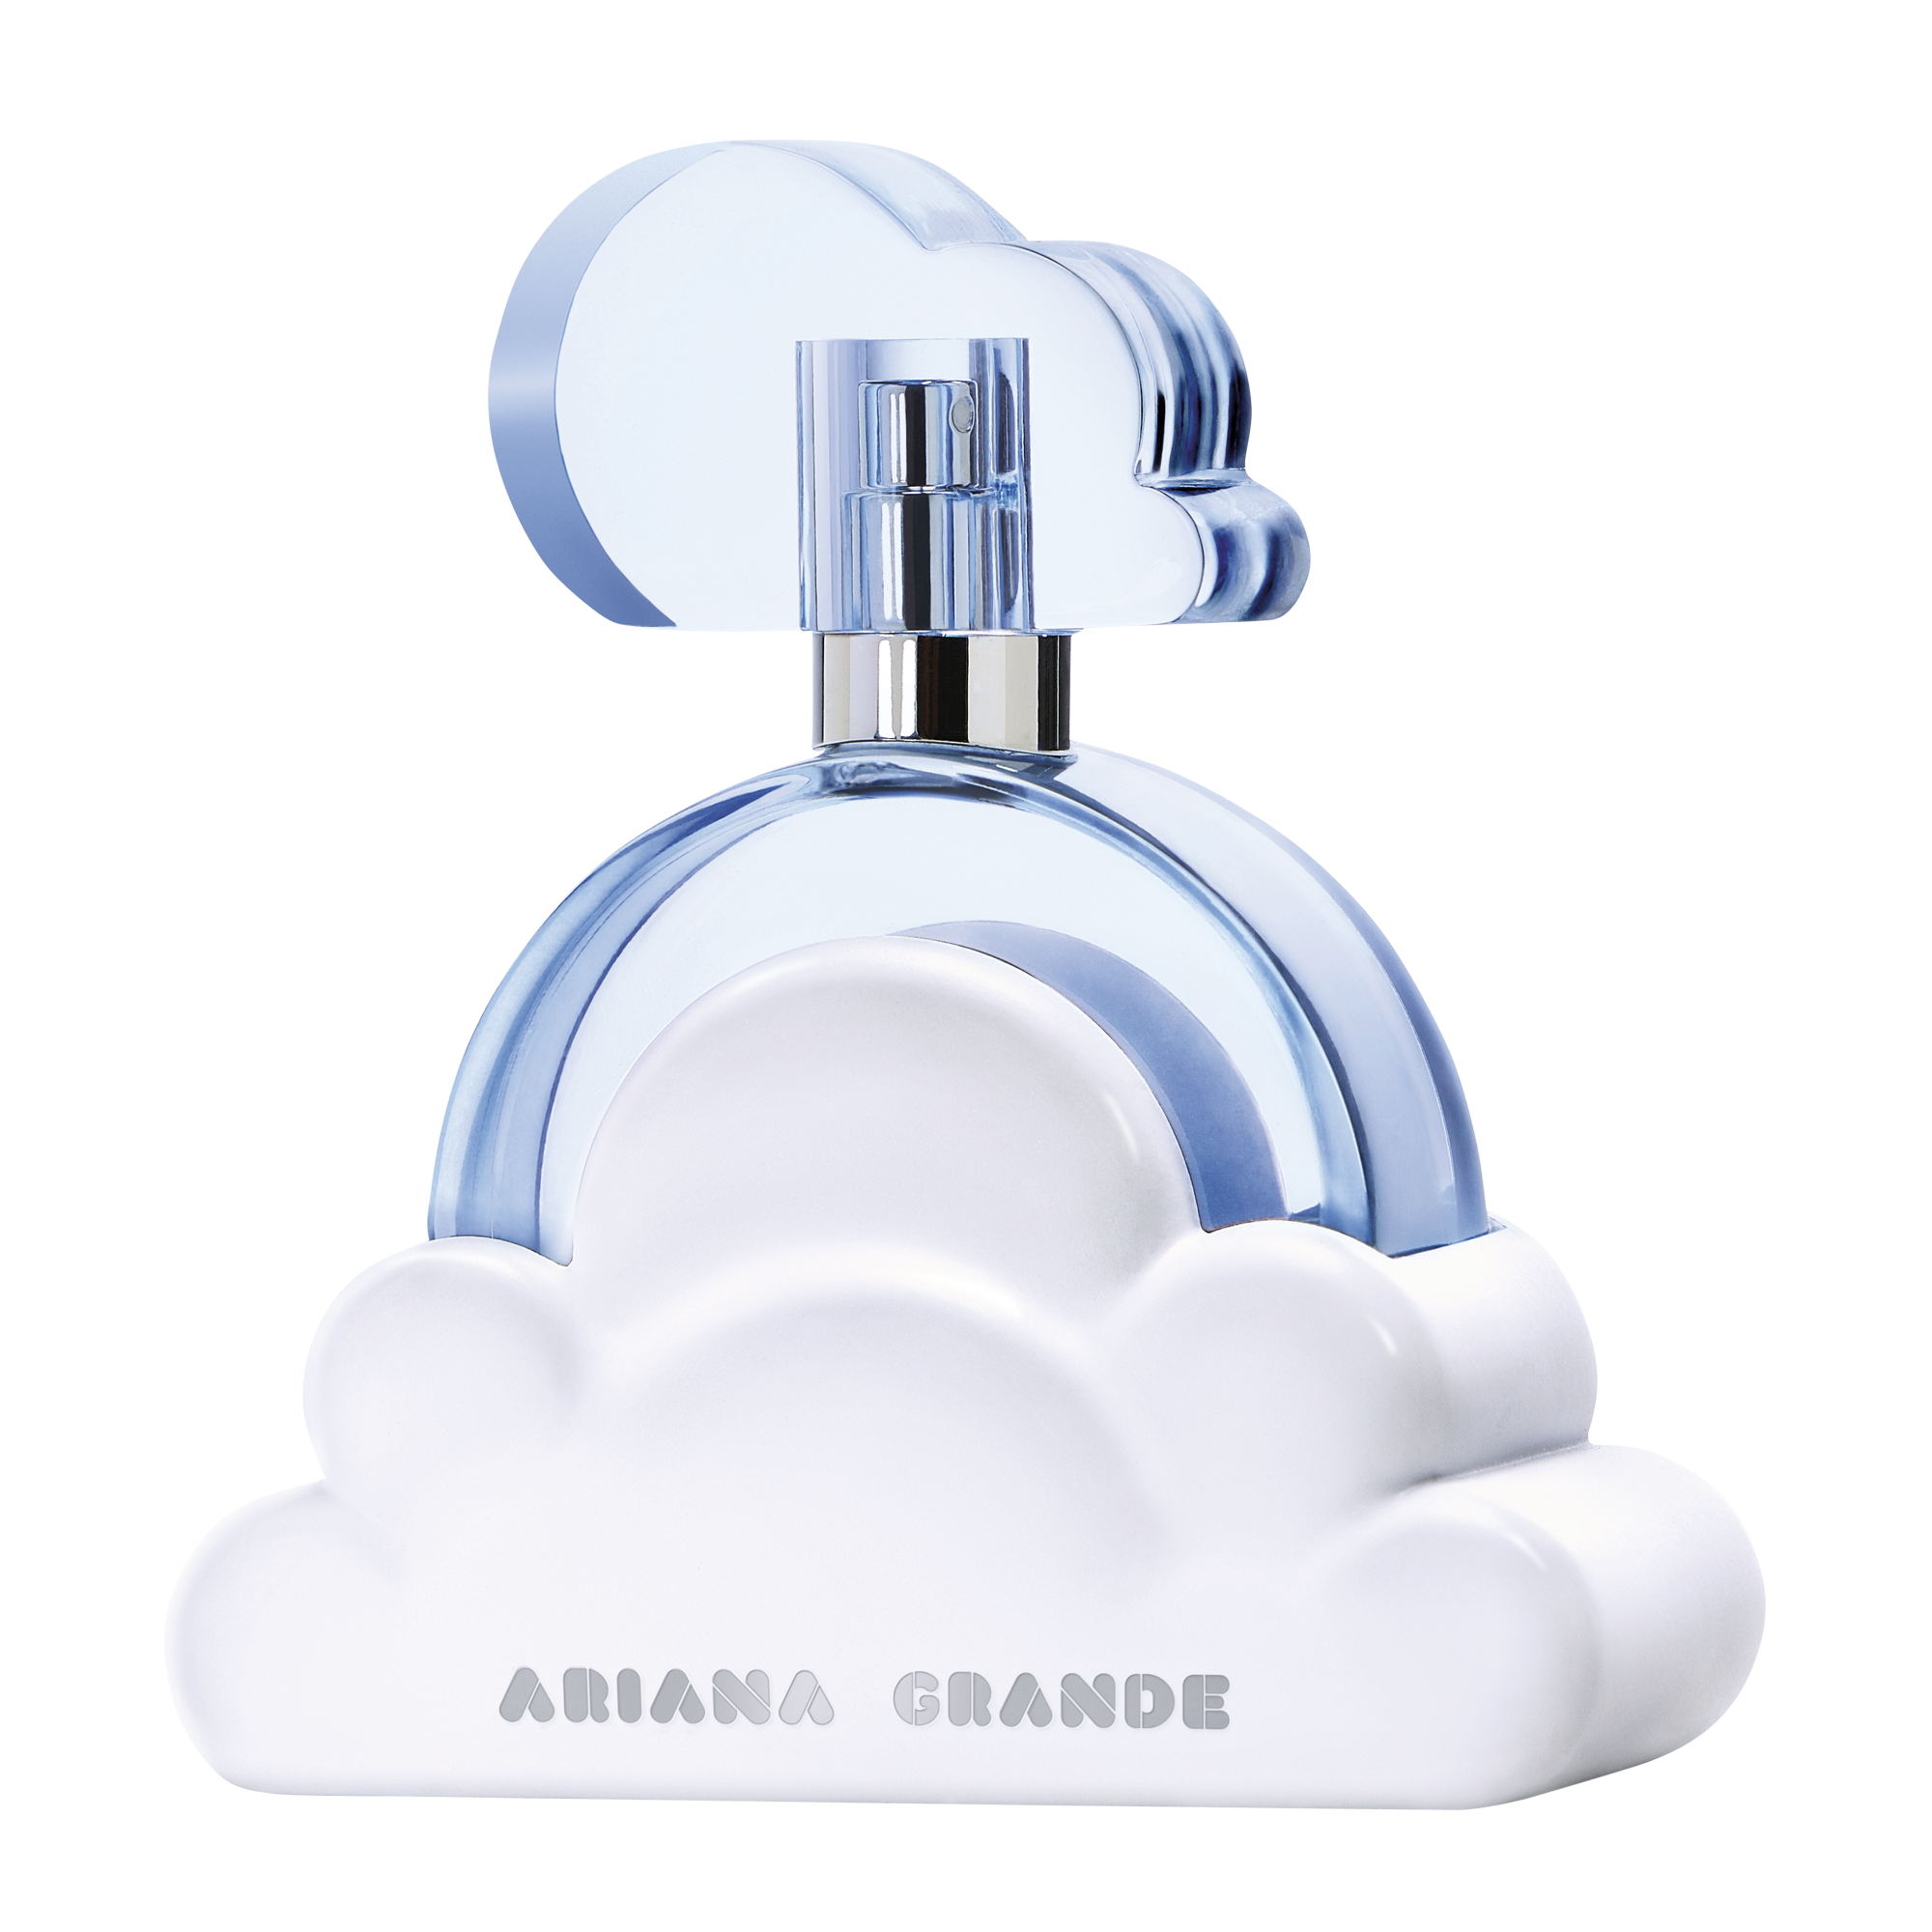 Ariana Grande - Cloud EDP 50 ml